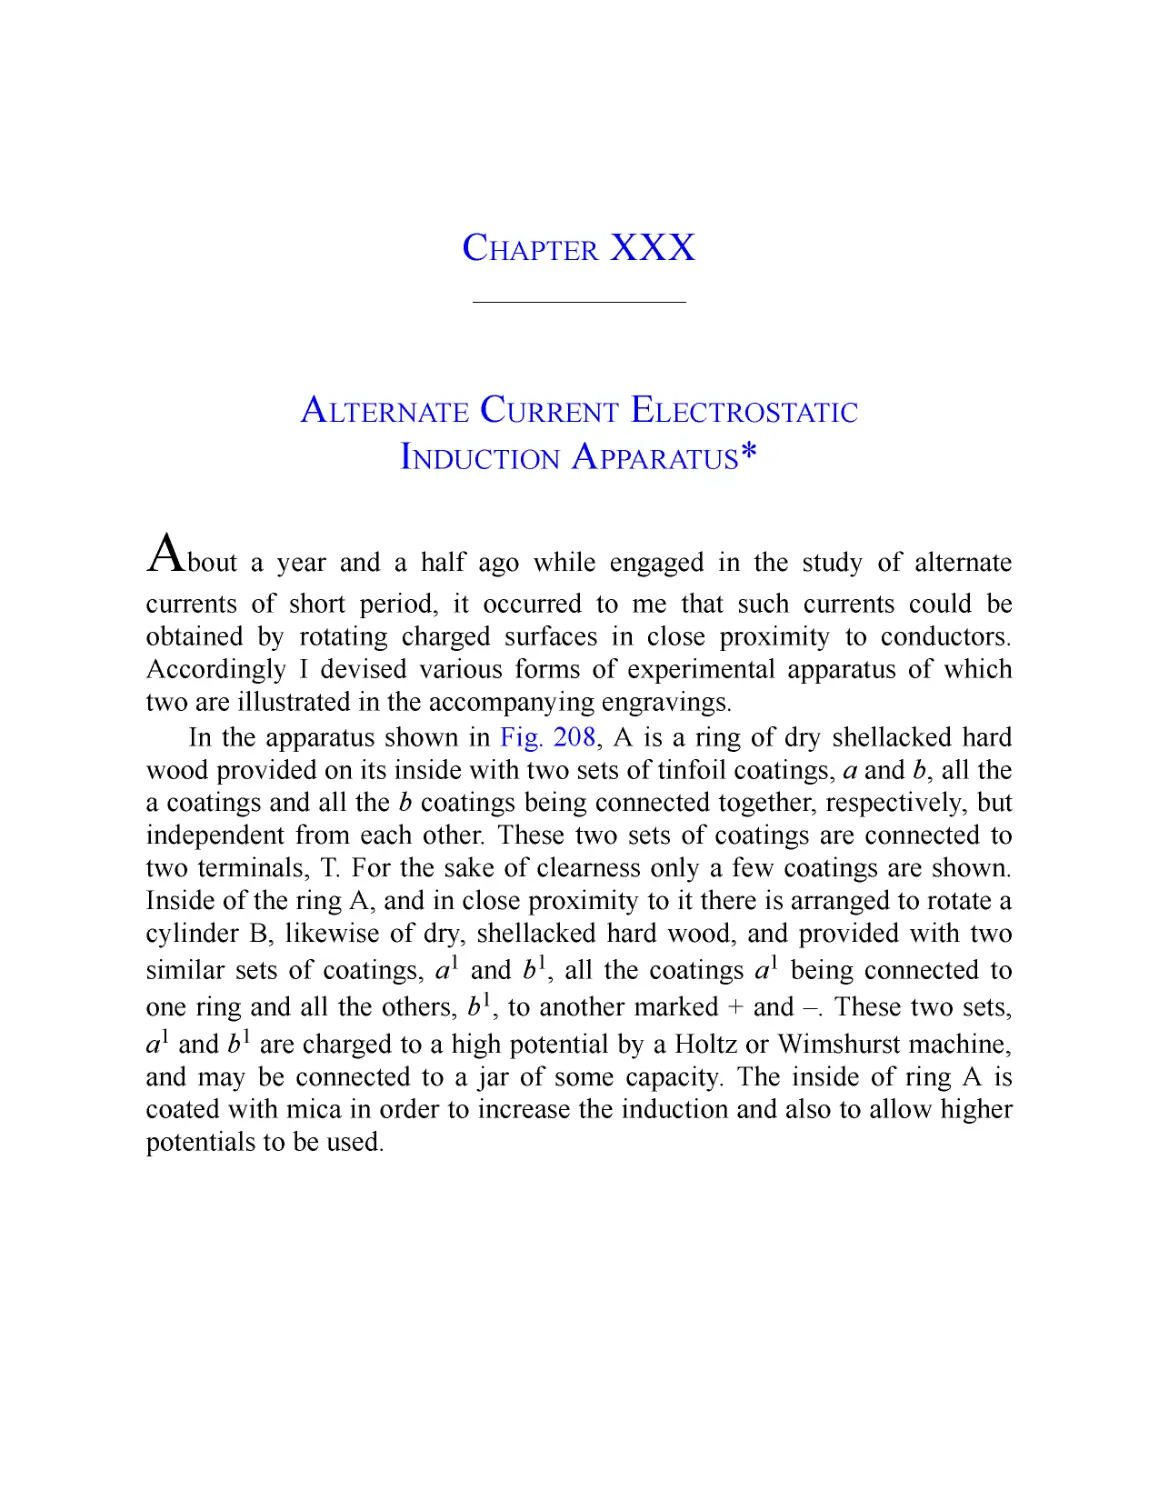 ﻿Chapter XXX: Alternate Current Electrostatic Induction Apparatu